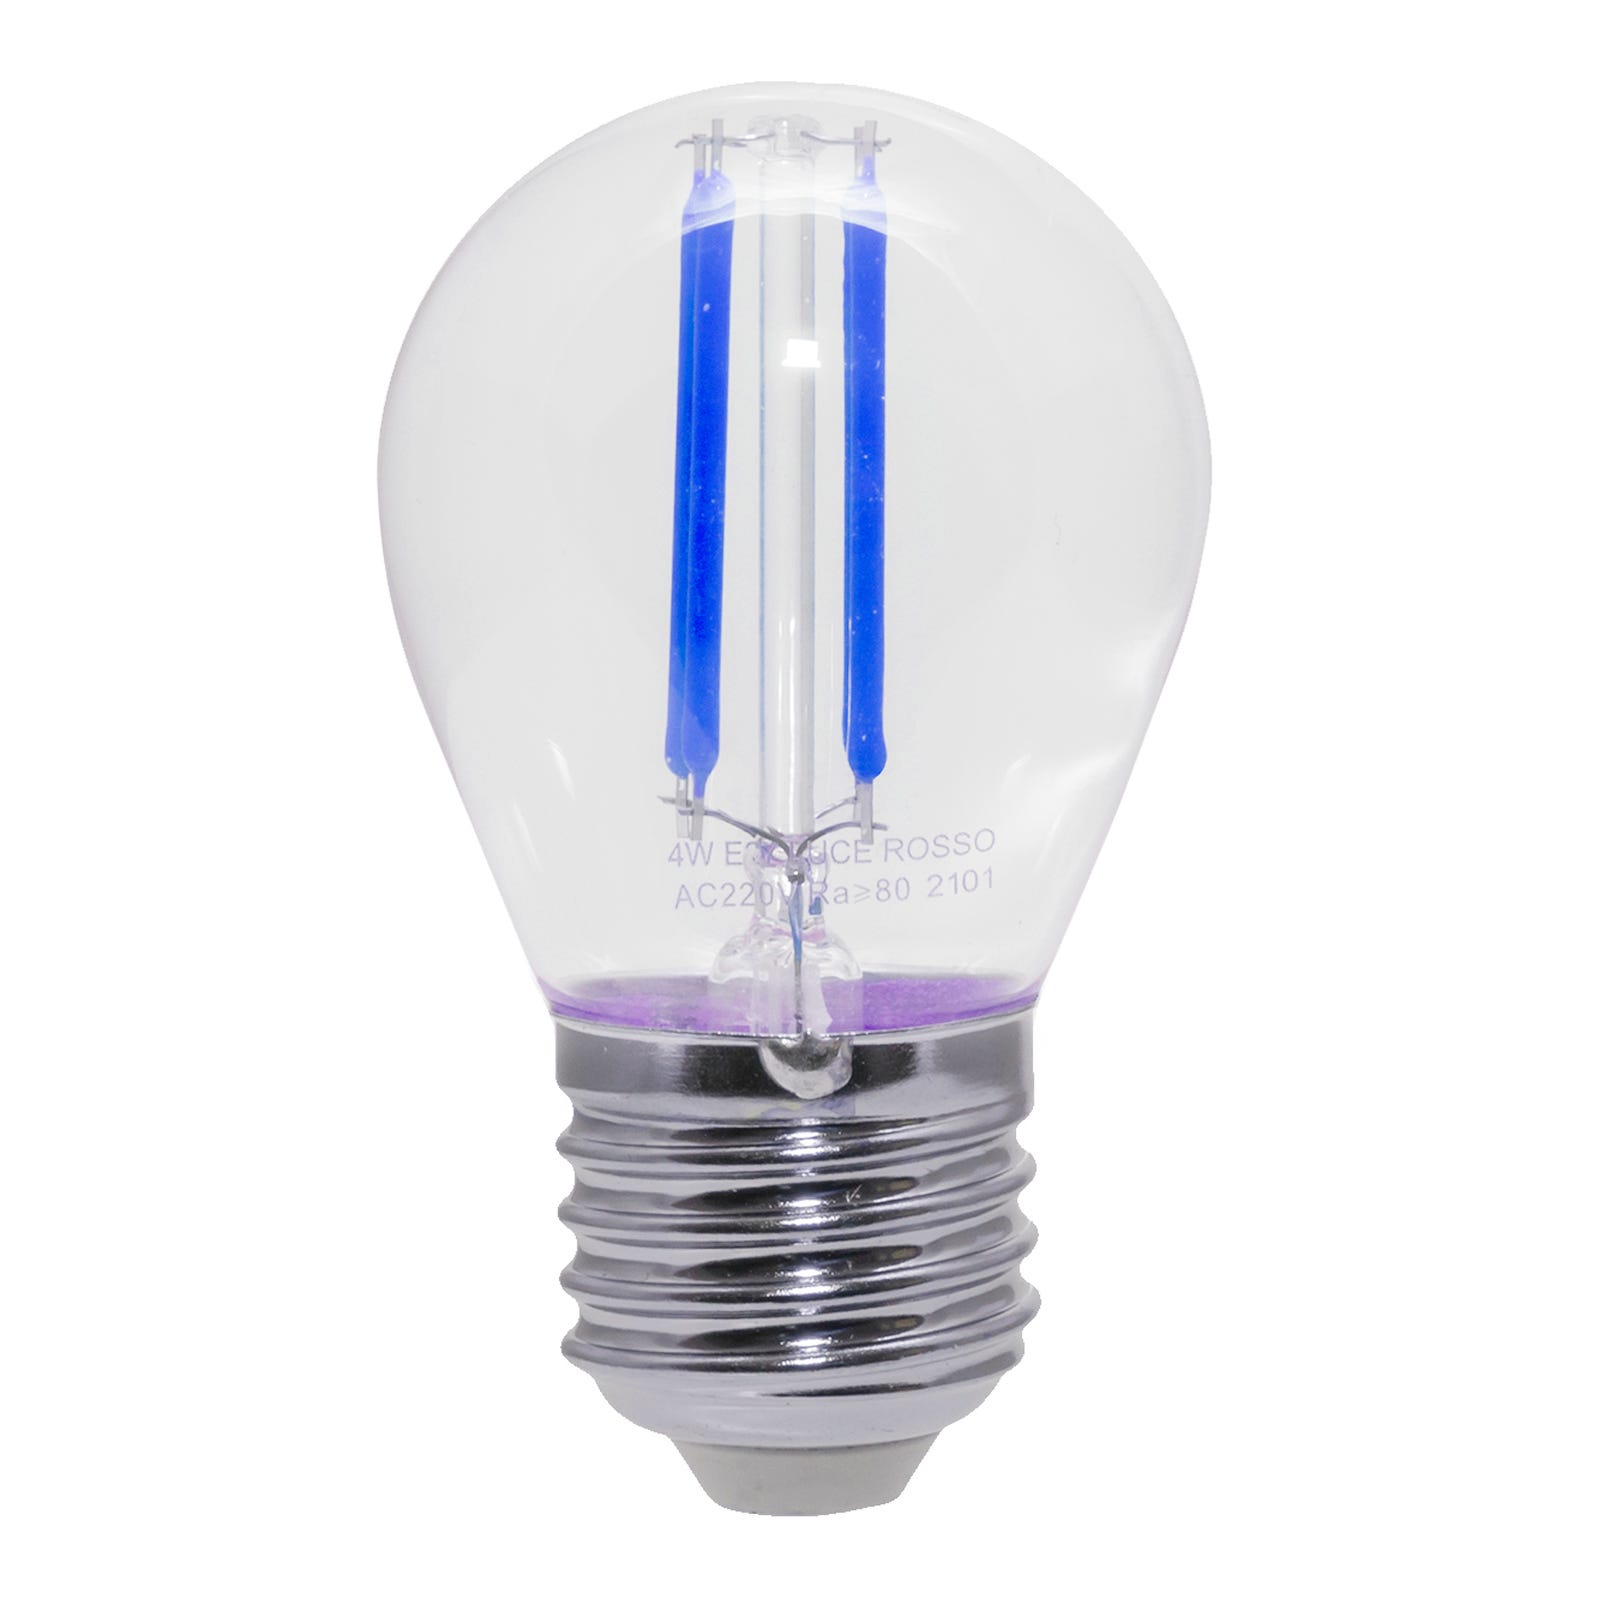 Lampadina LED colorata, 2 e 5 watt, blu, rivestimento grande Ø60 